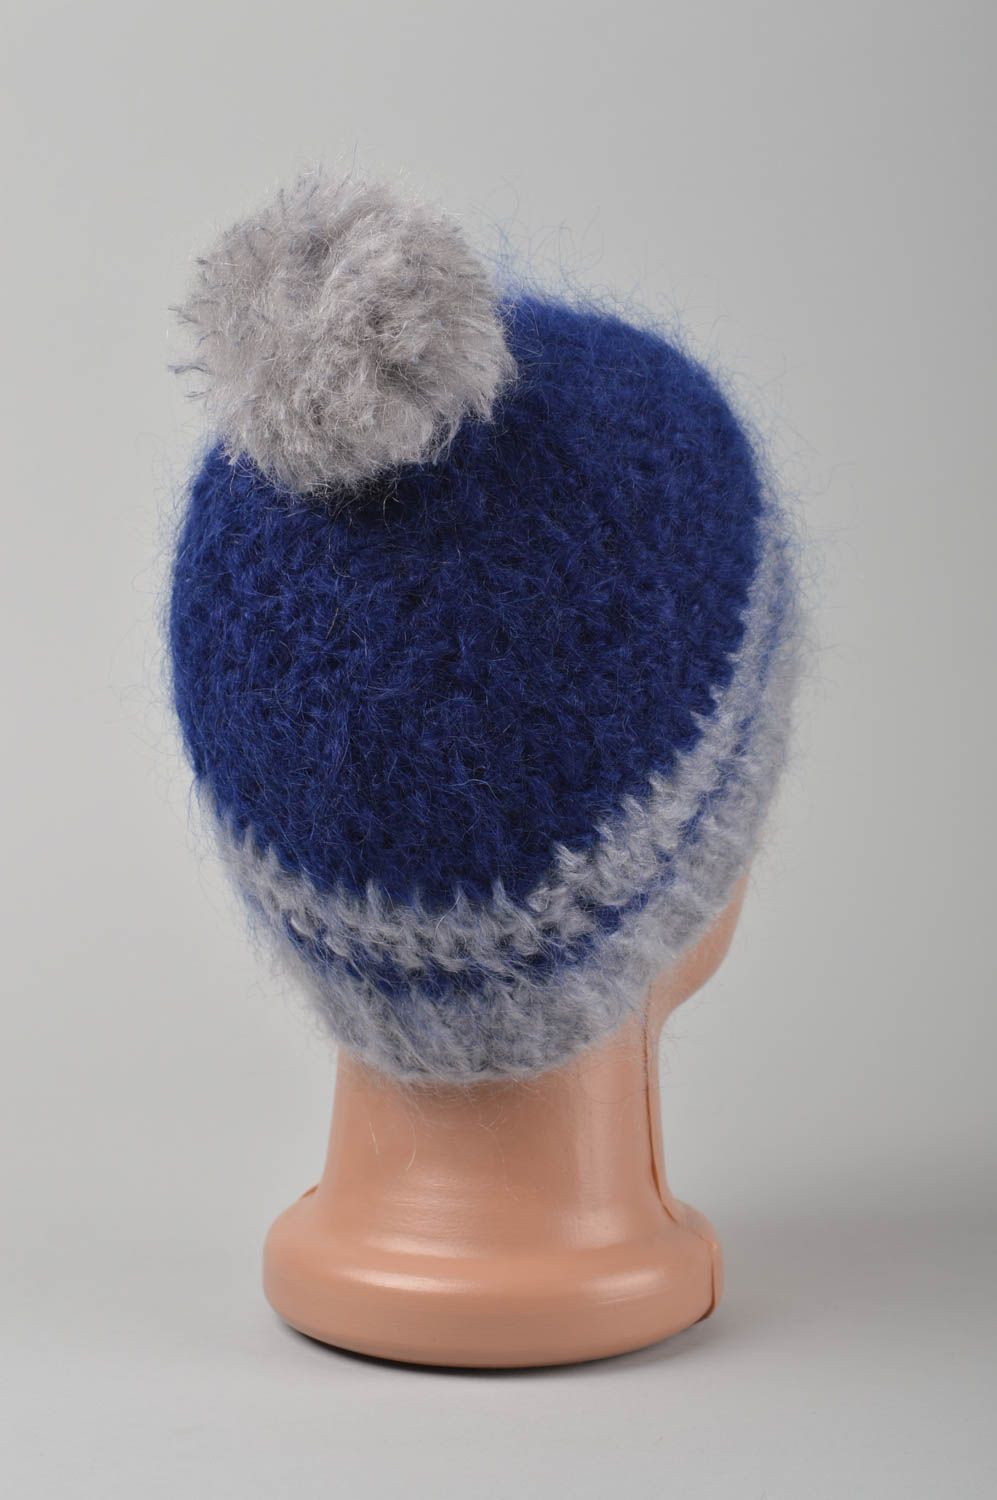 Handmade hat designer hat unusual gift crocheted hat winter hat wool hat photo 5